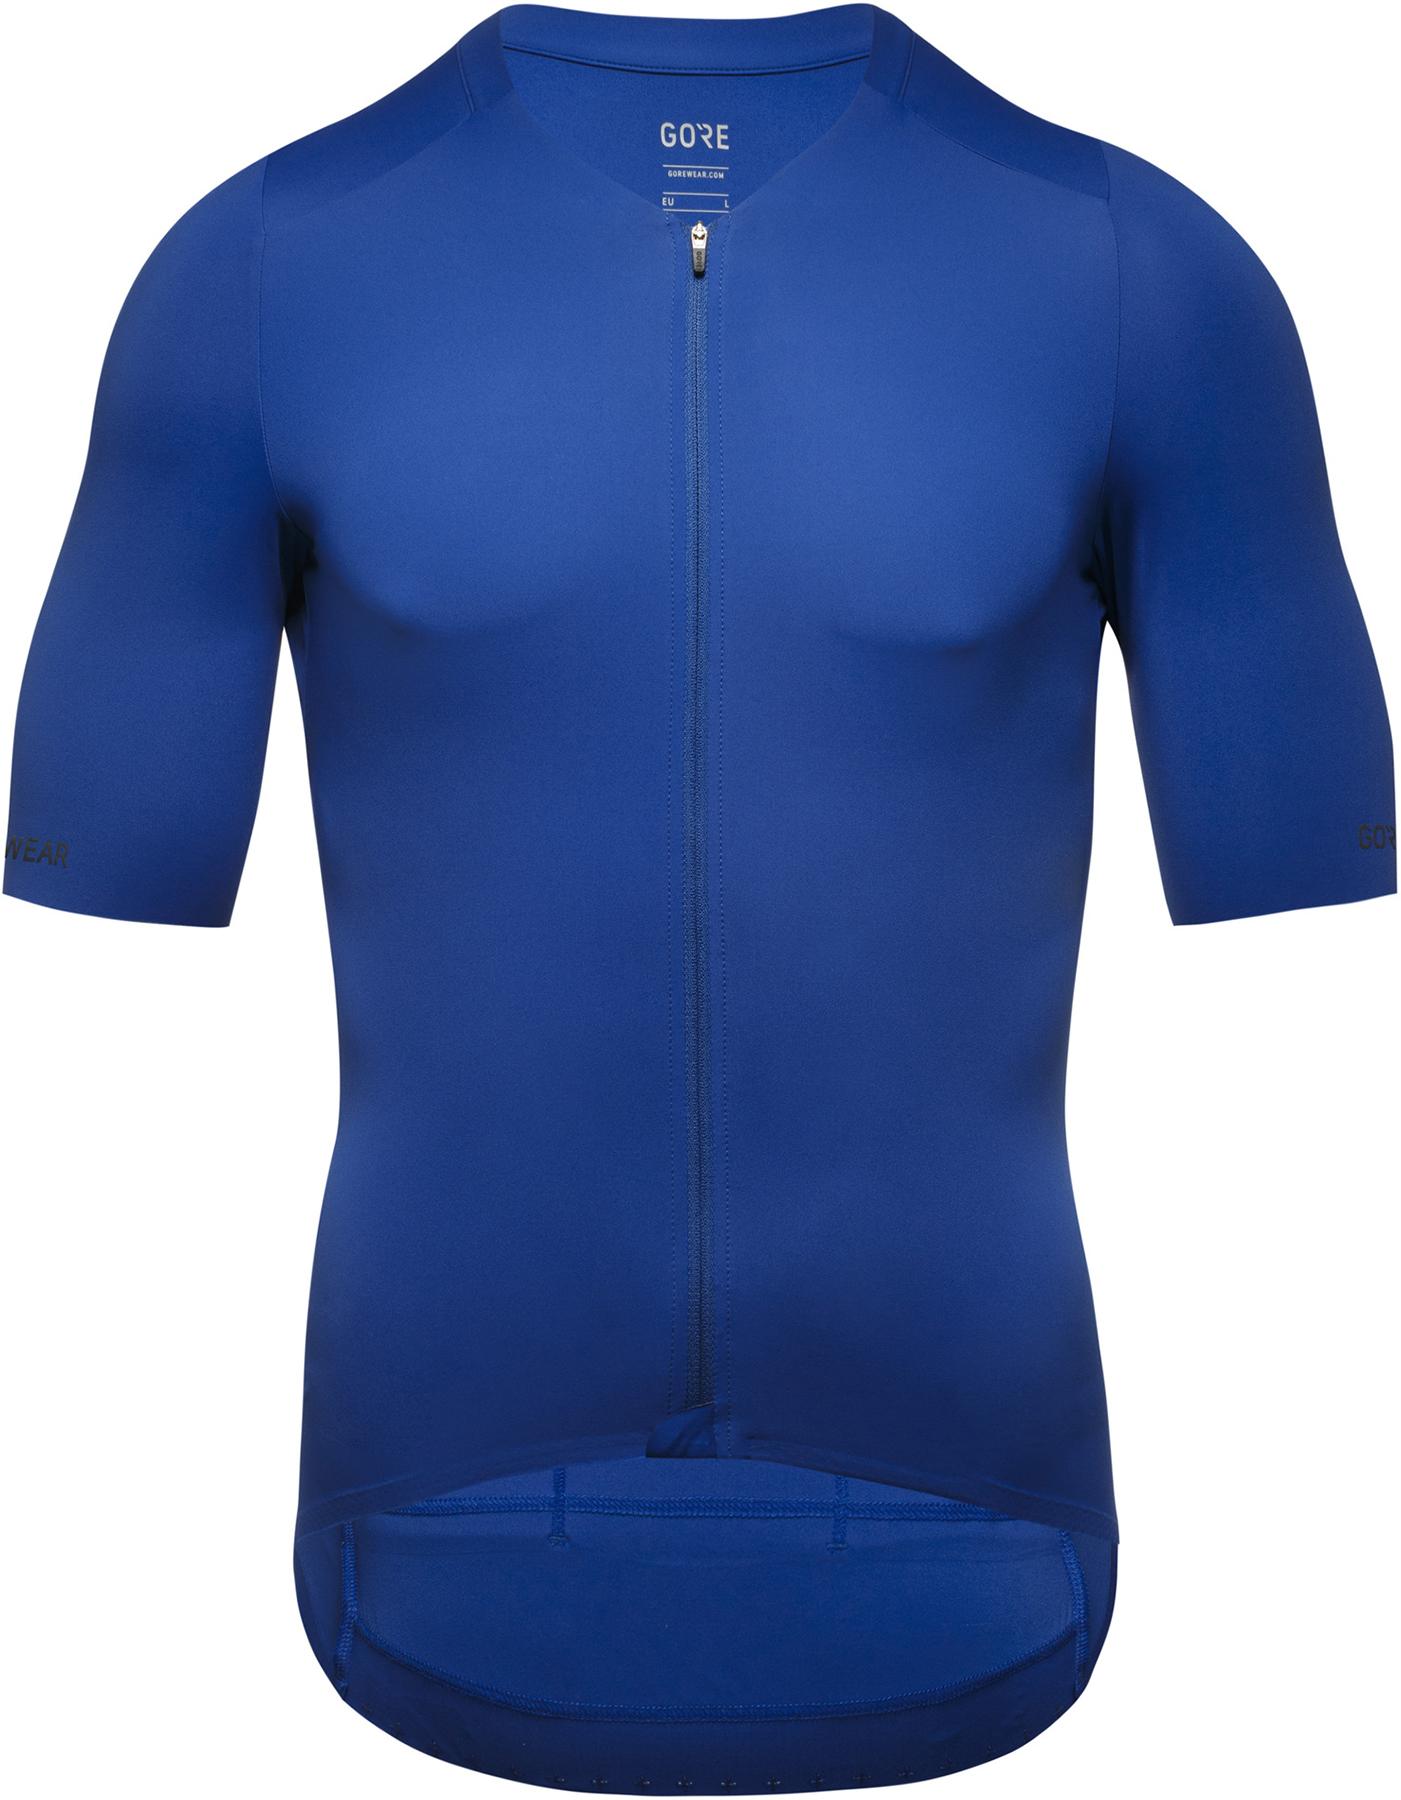 Gorewear Distance Jersey  Ultramarine Blue